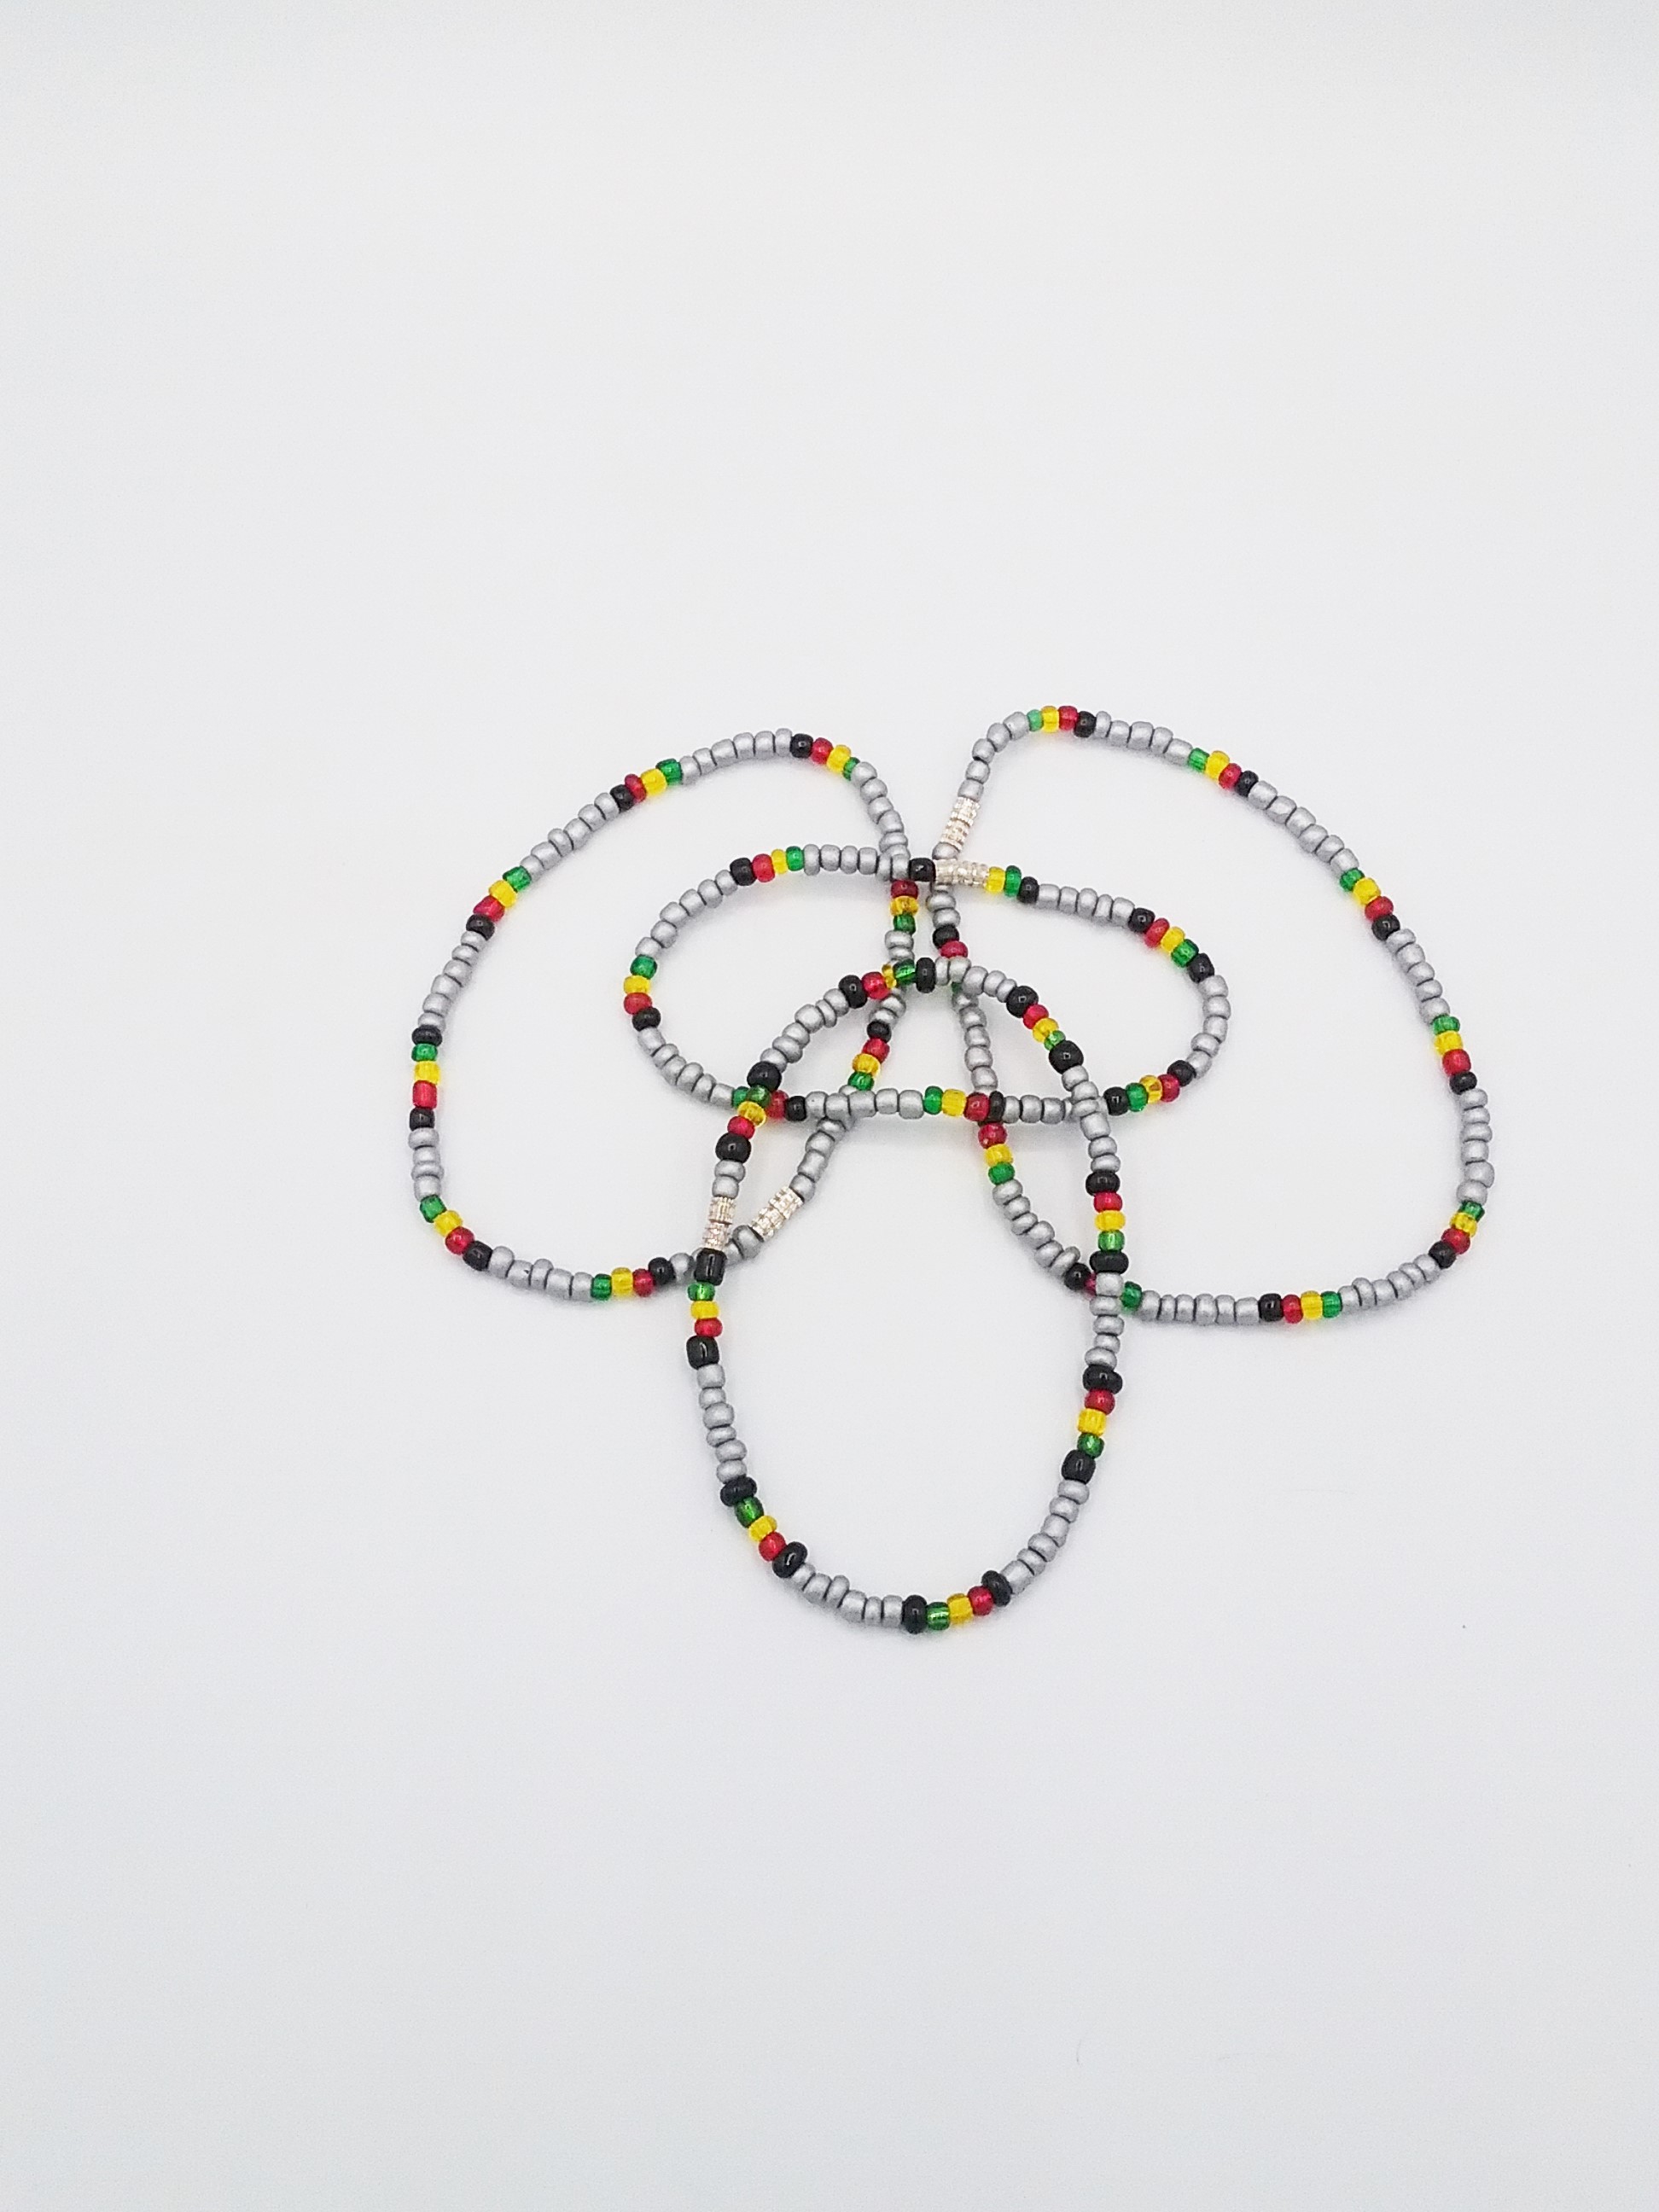 Learn How to Make a Handmade Seed Bead Rasta Bracelet  by Elantin  Medium